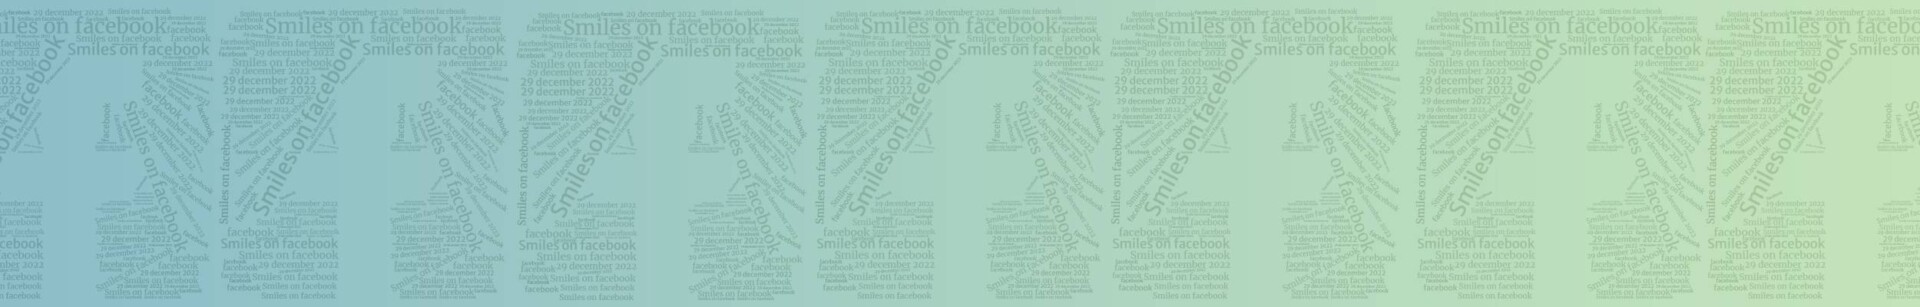 SMILES on Facebook